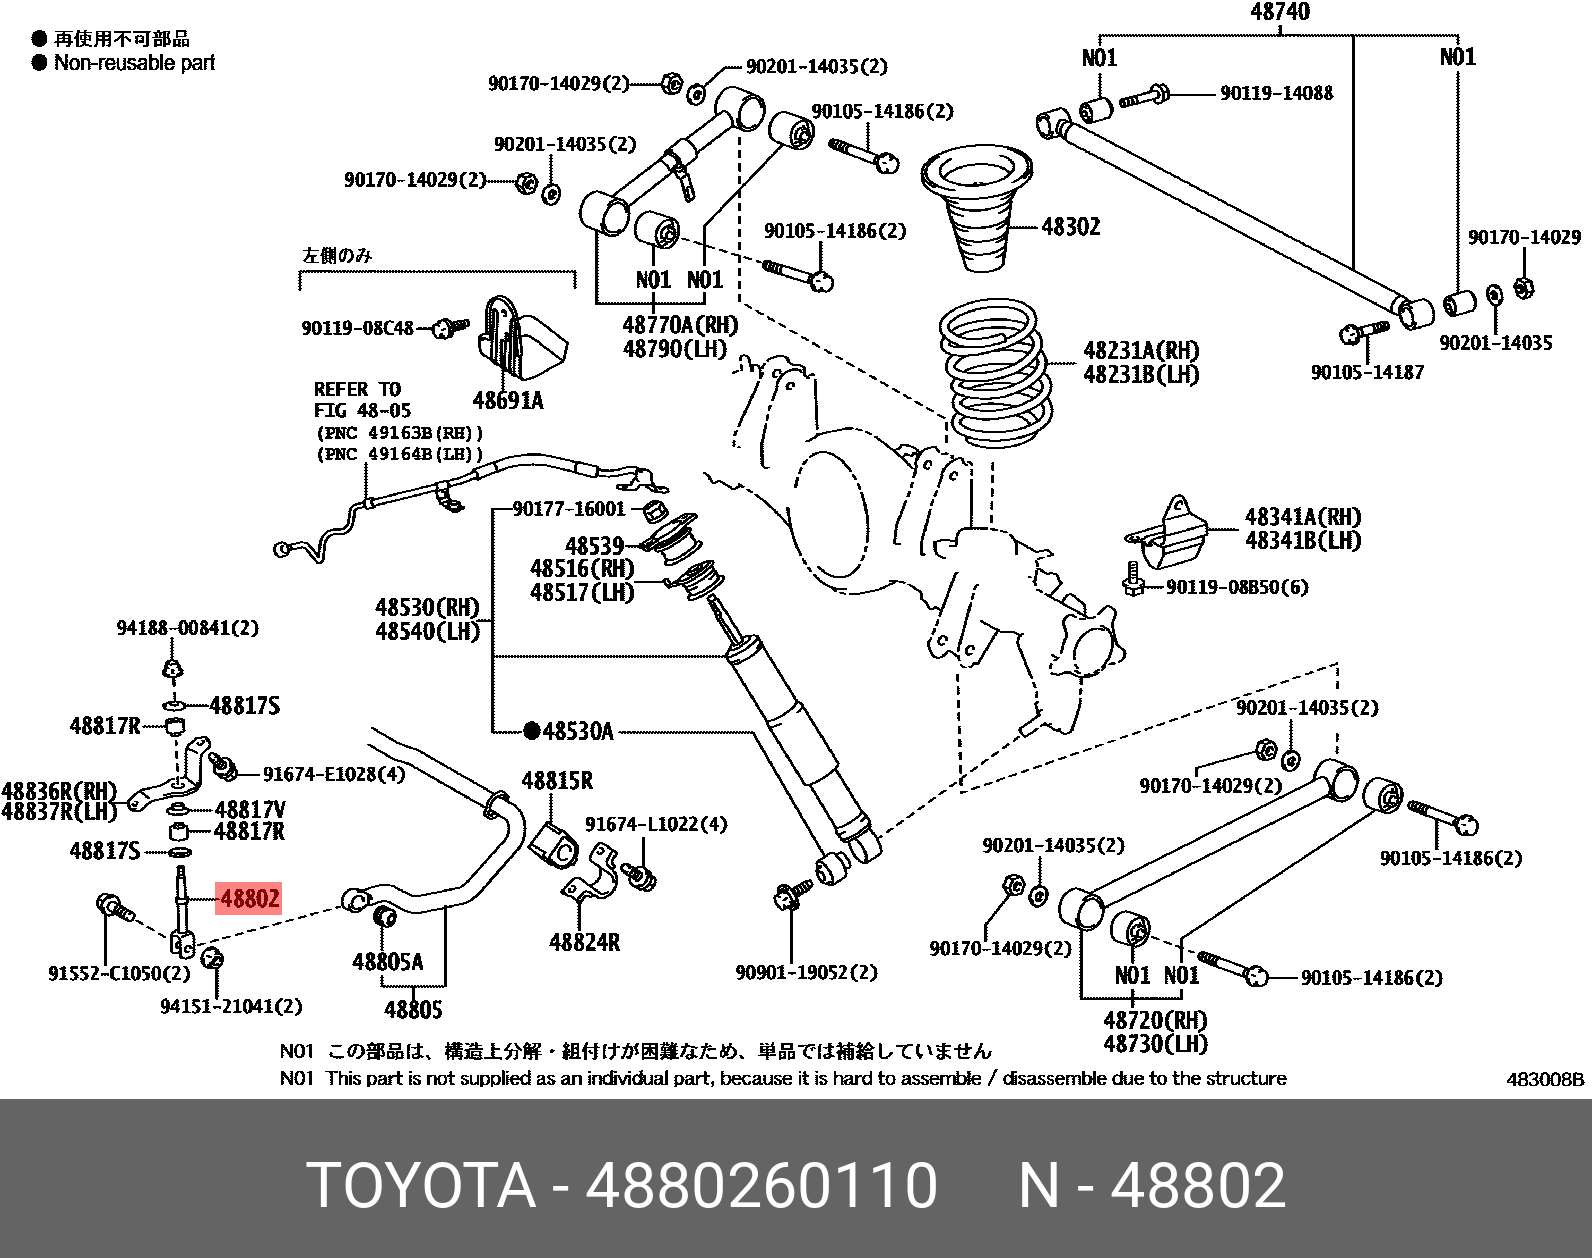 Стойка стабилизатора | зад прав/лев | - Toyota 48802-60110